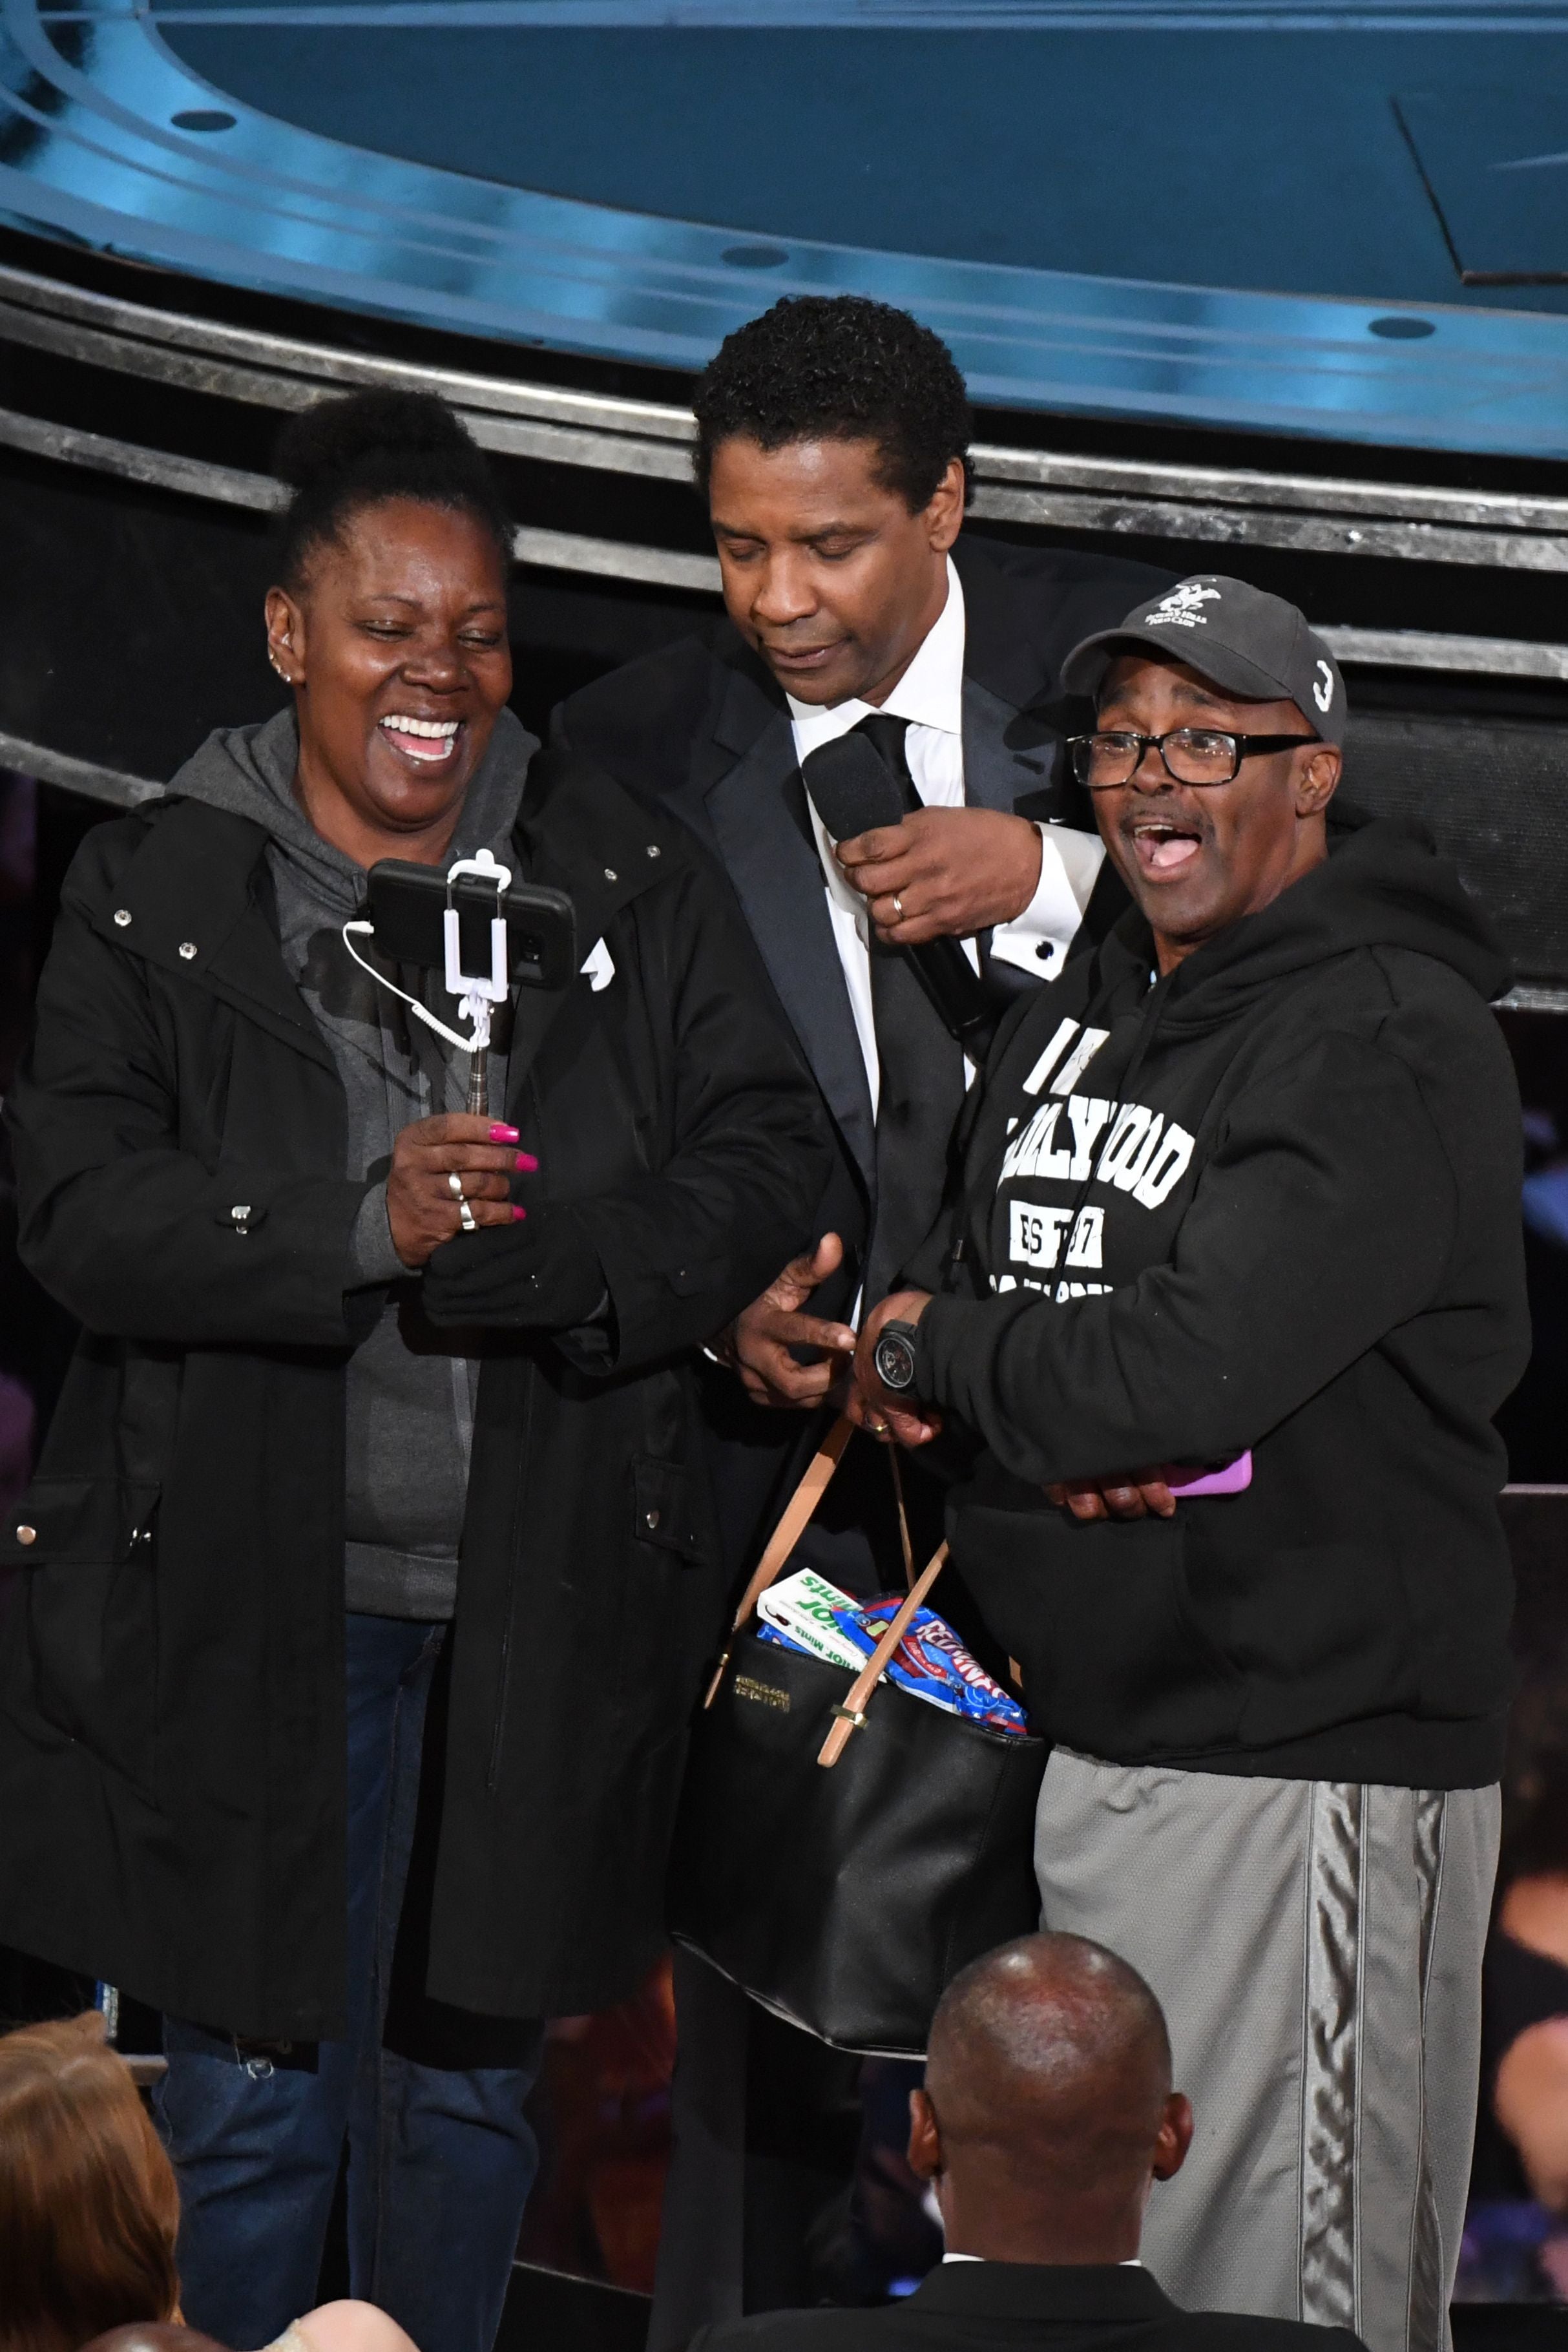 Denzel Washington ‘Marries’ Stunned Tourists At the Oscars